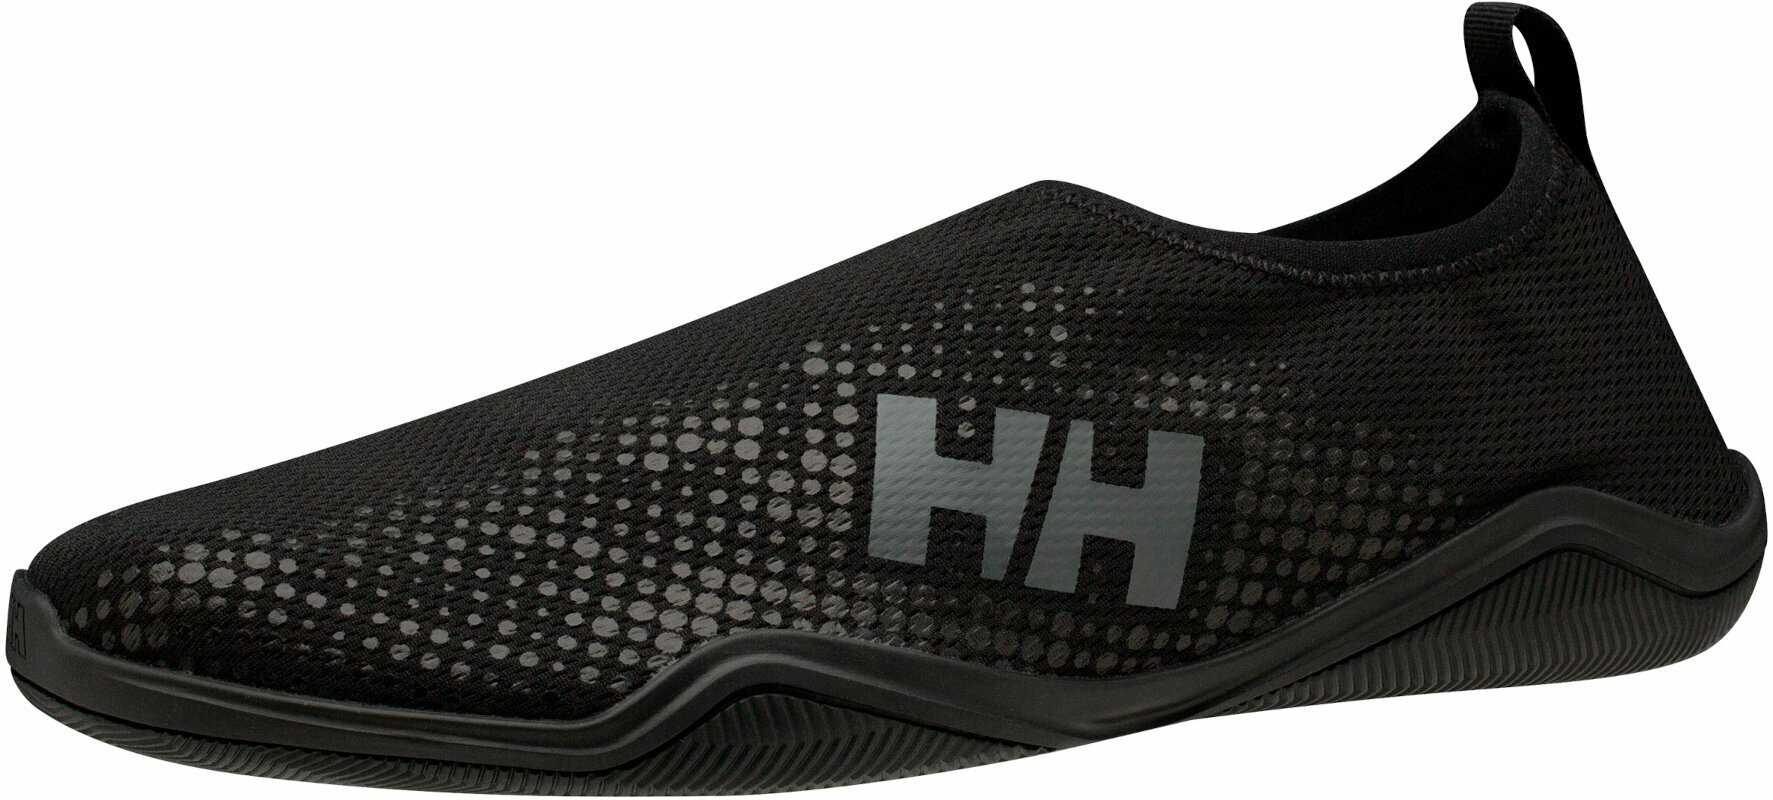 Mens Sailing Shoes Helly Hansen Men's Crest Watermoc Black/Charcoal 43